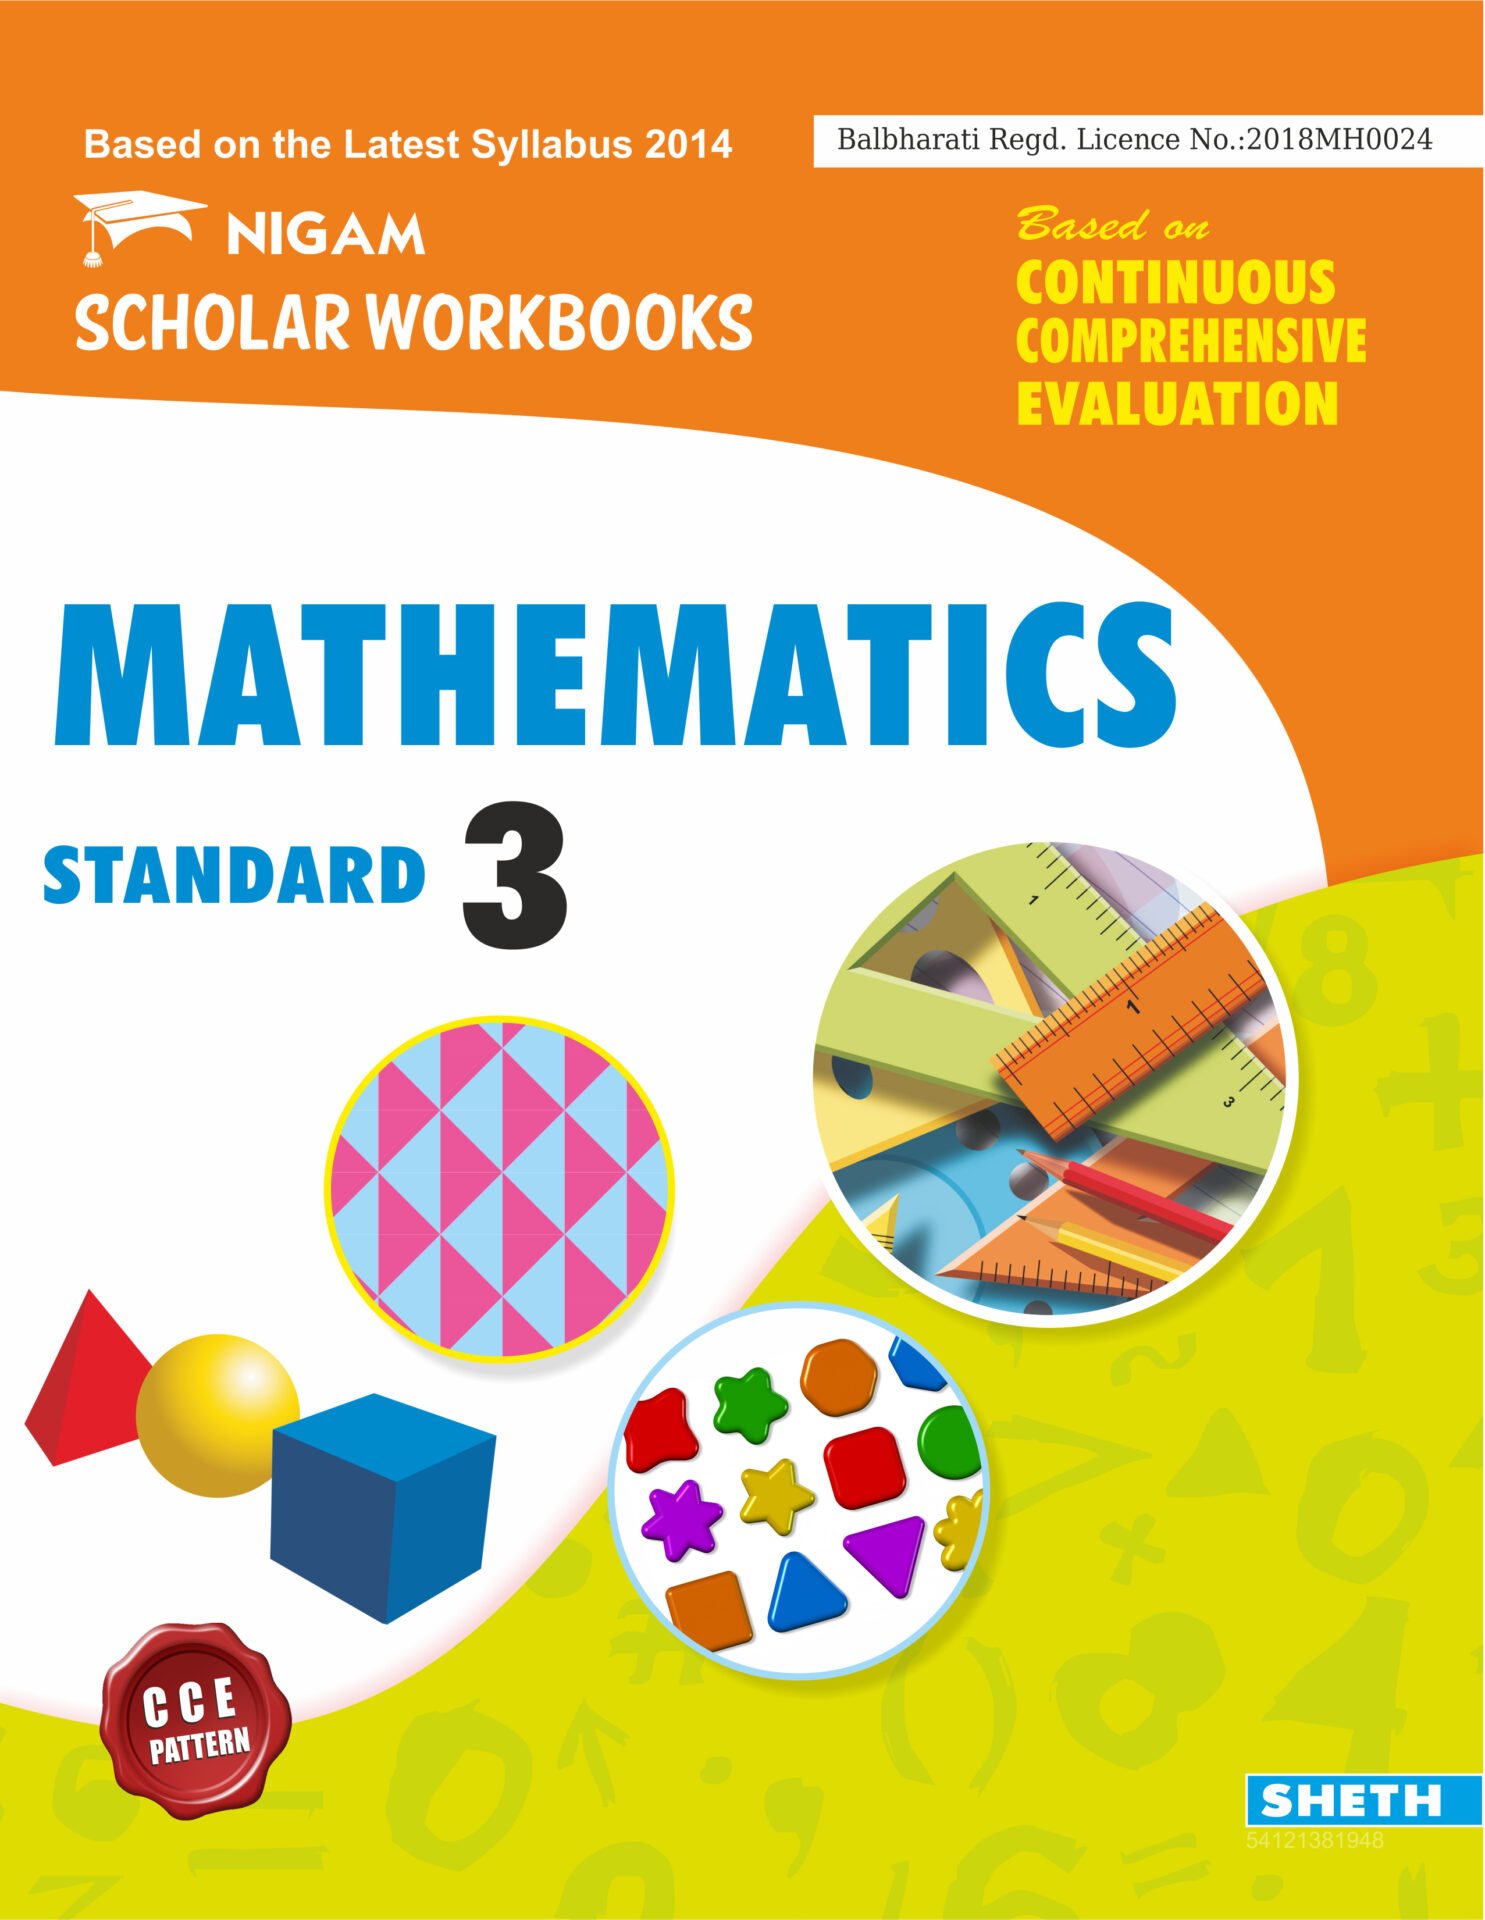 CCE Pattern Nigam Scholar Workbooks Mathematics Standard 3 1